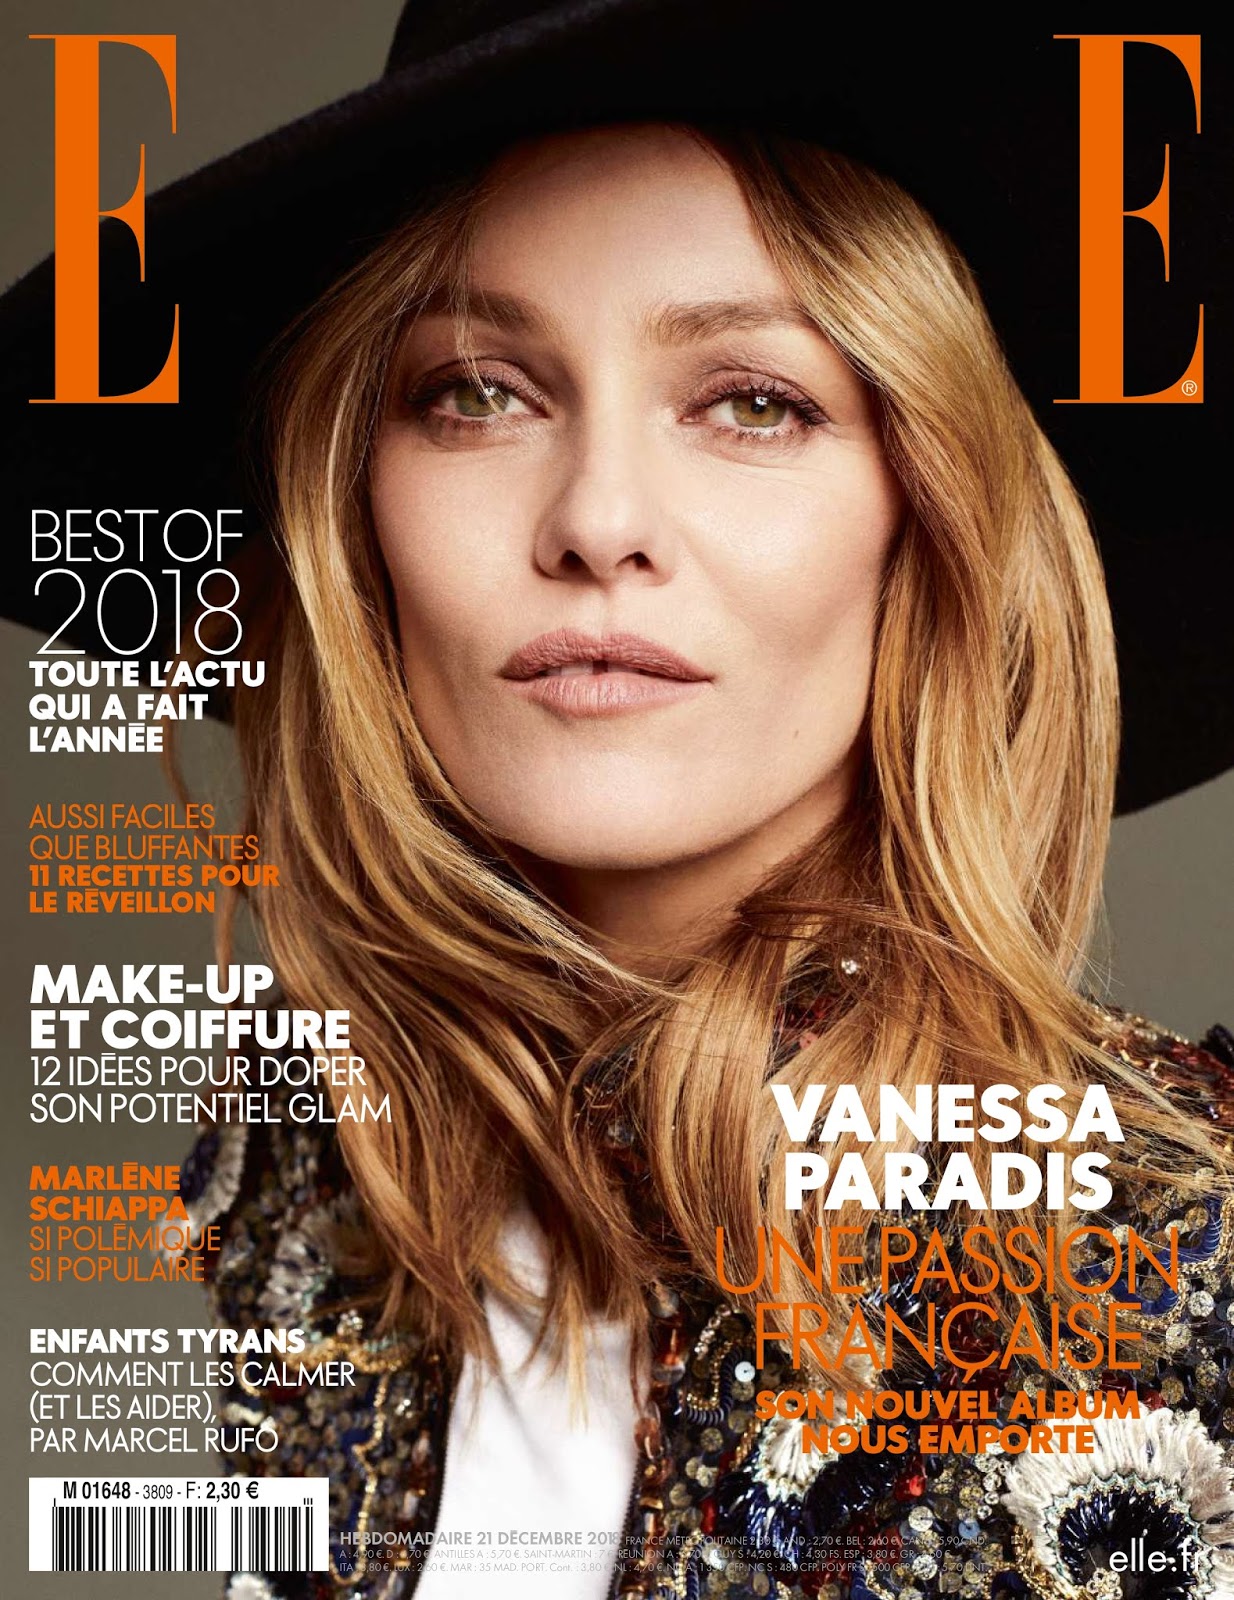 Vanessa Paradis by Philip Gay for Elle France Dec 21-2018 (1).jpg